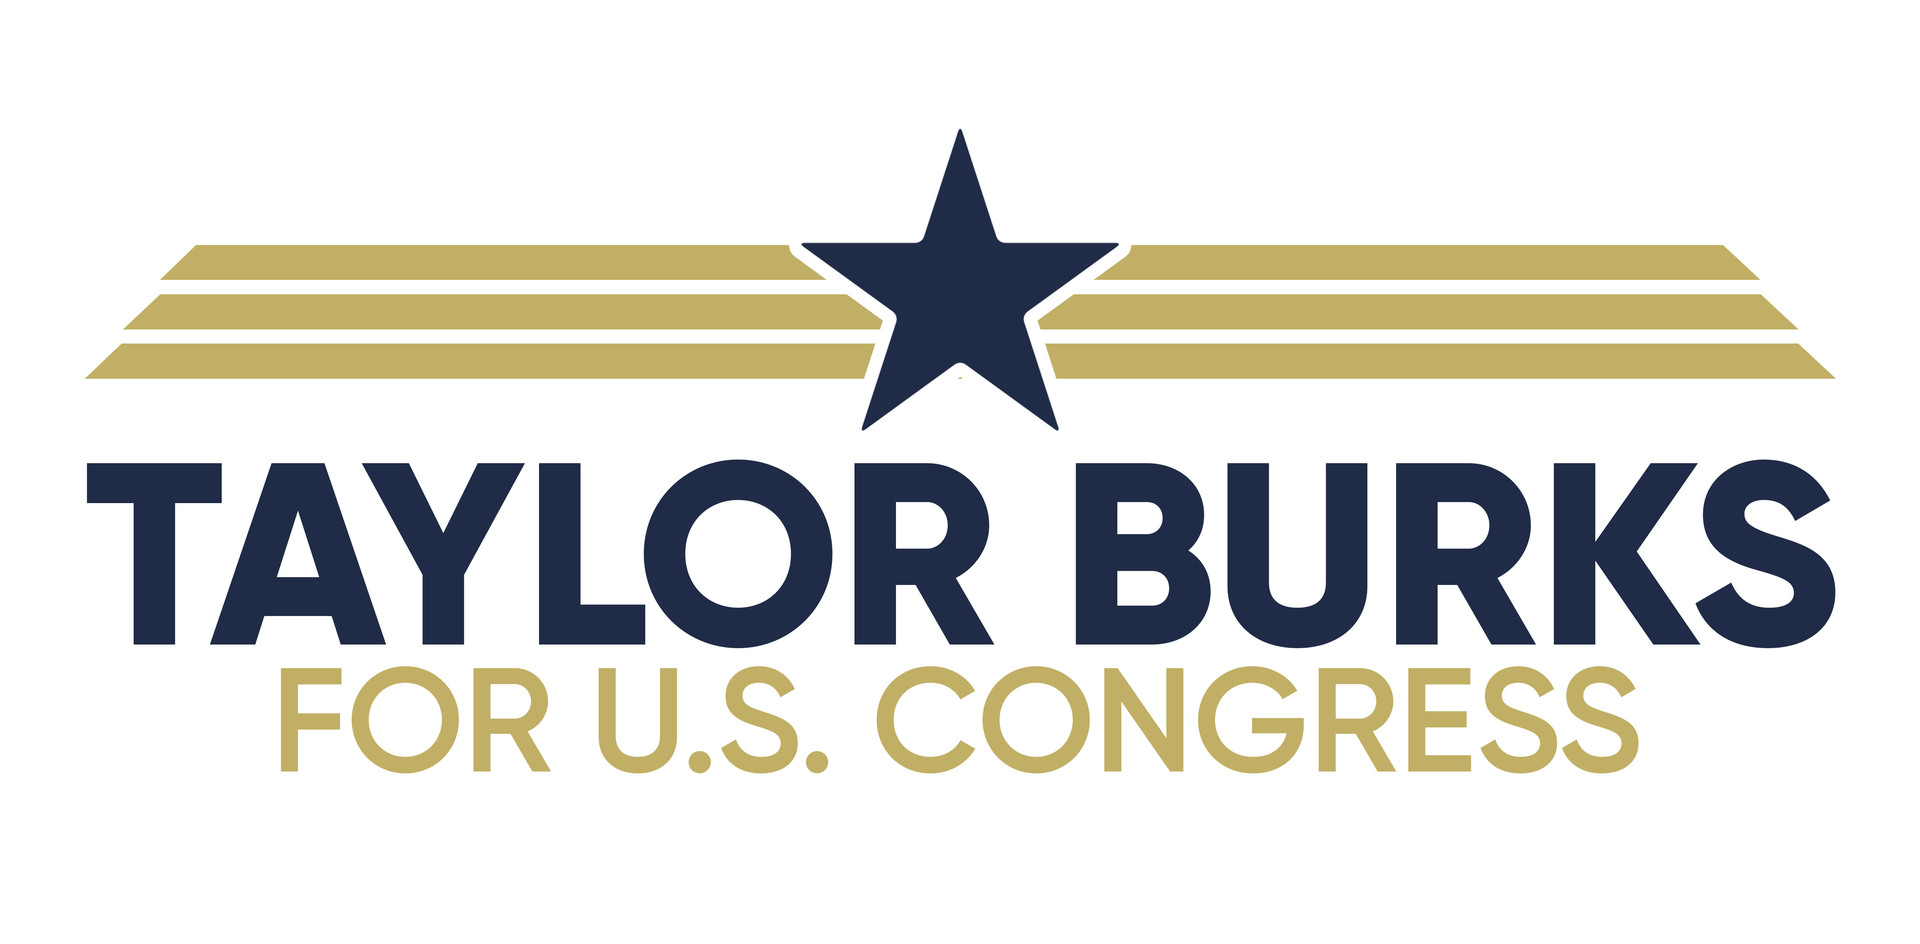 Taylor burks logo v3taylor burks logo full color